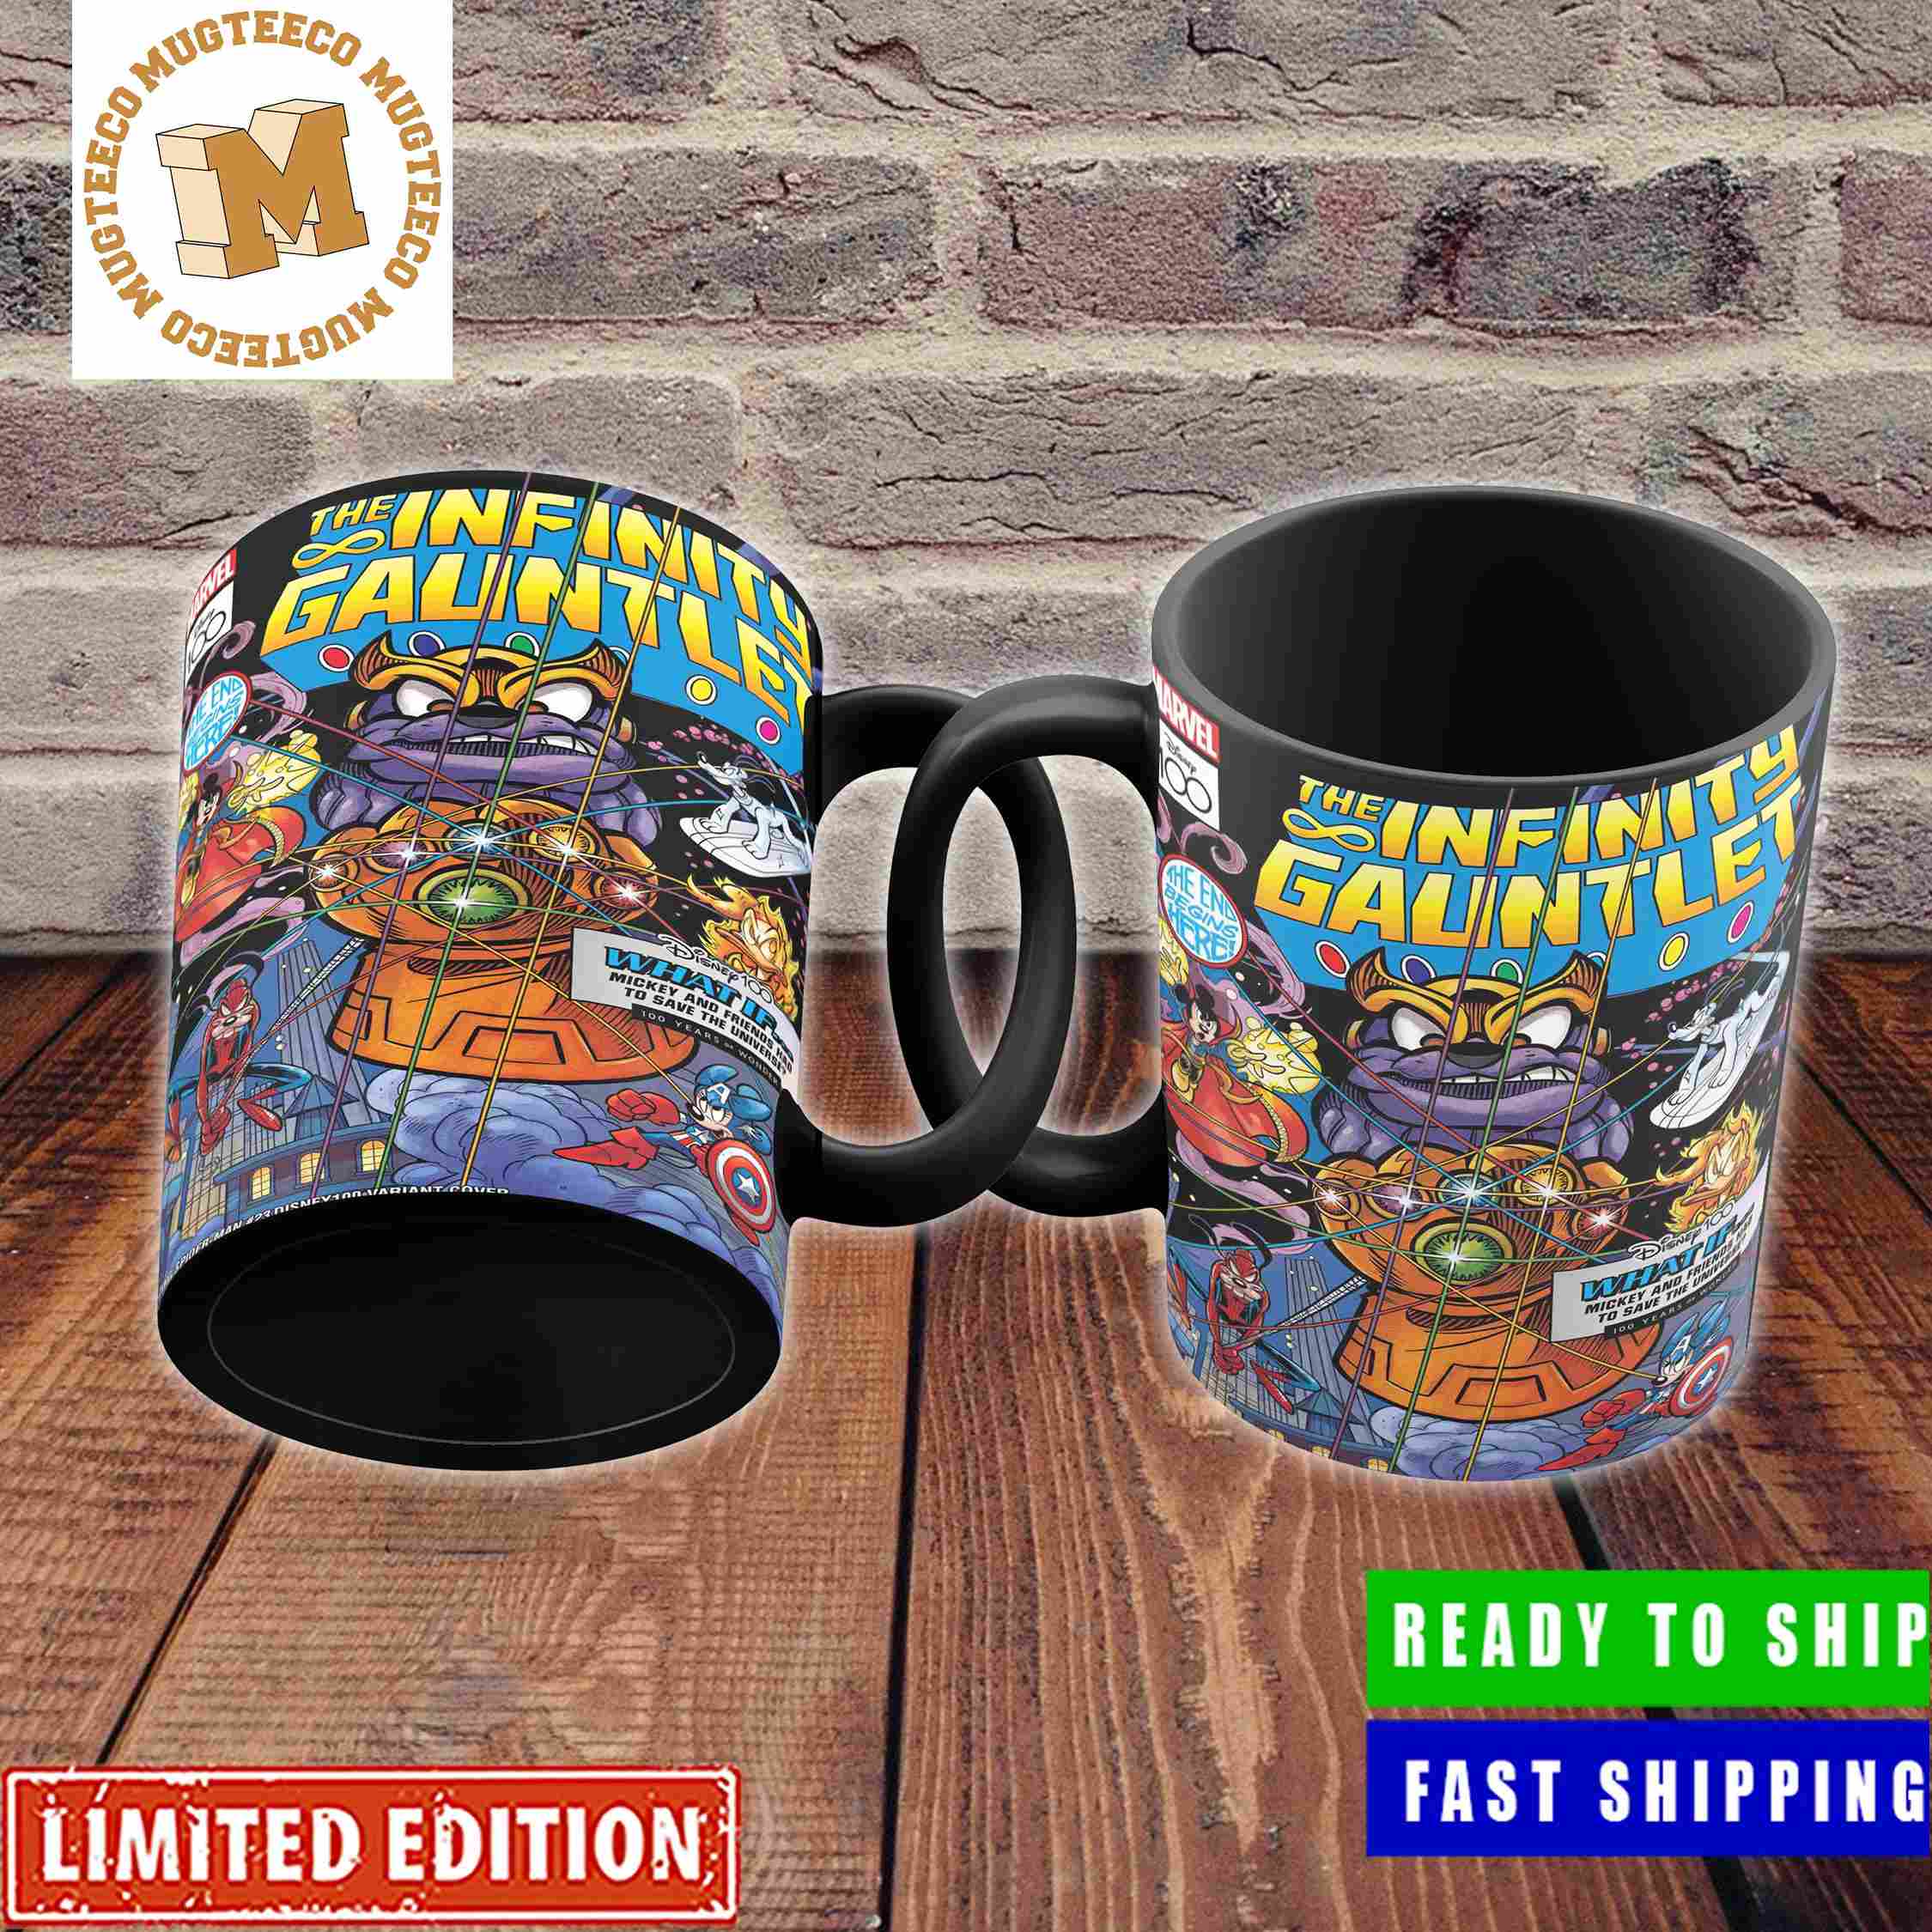 Disney Coffee Mug with Lid - Disney100 - Mickey & Friends